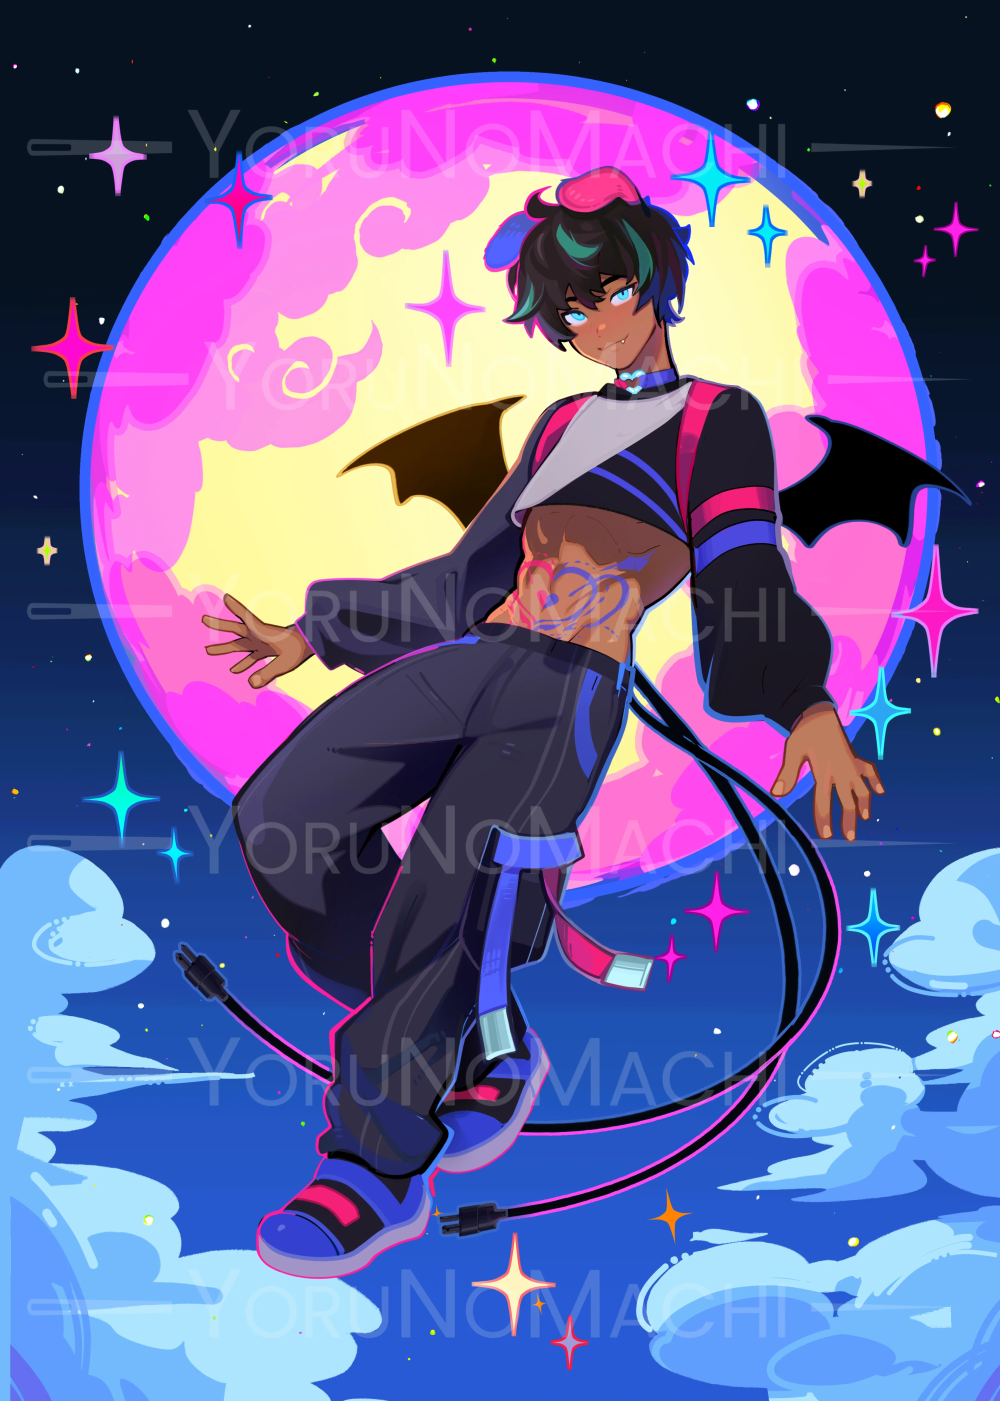 Moon Boy Poster